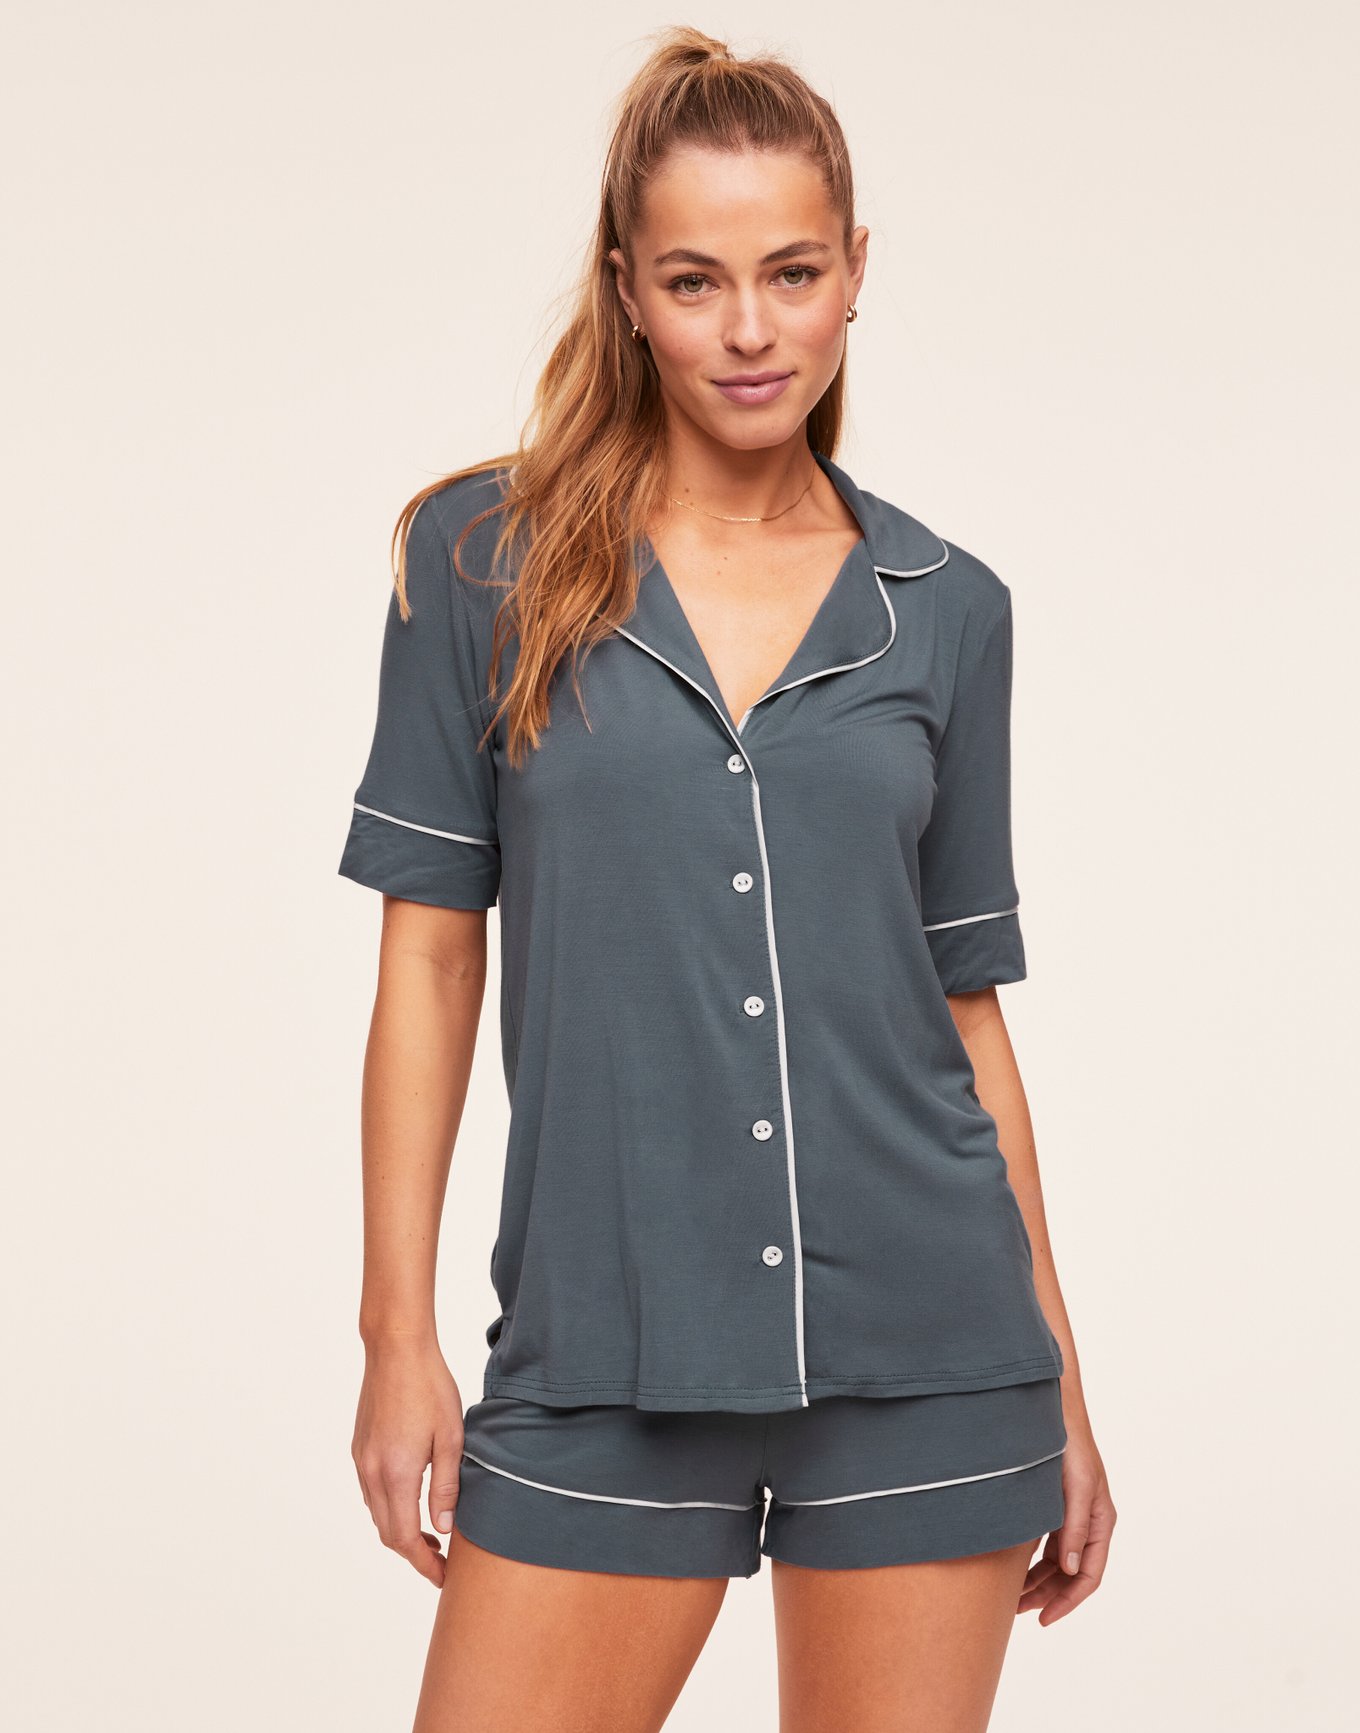 Matilda Gray Knit Pajama Set, XS-XL